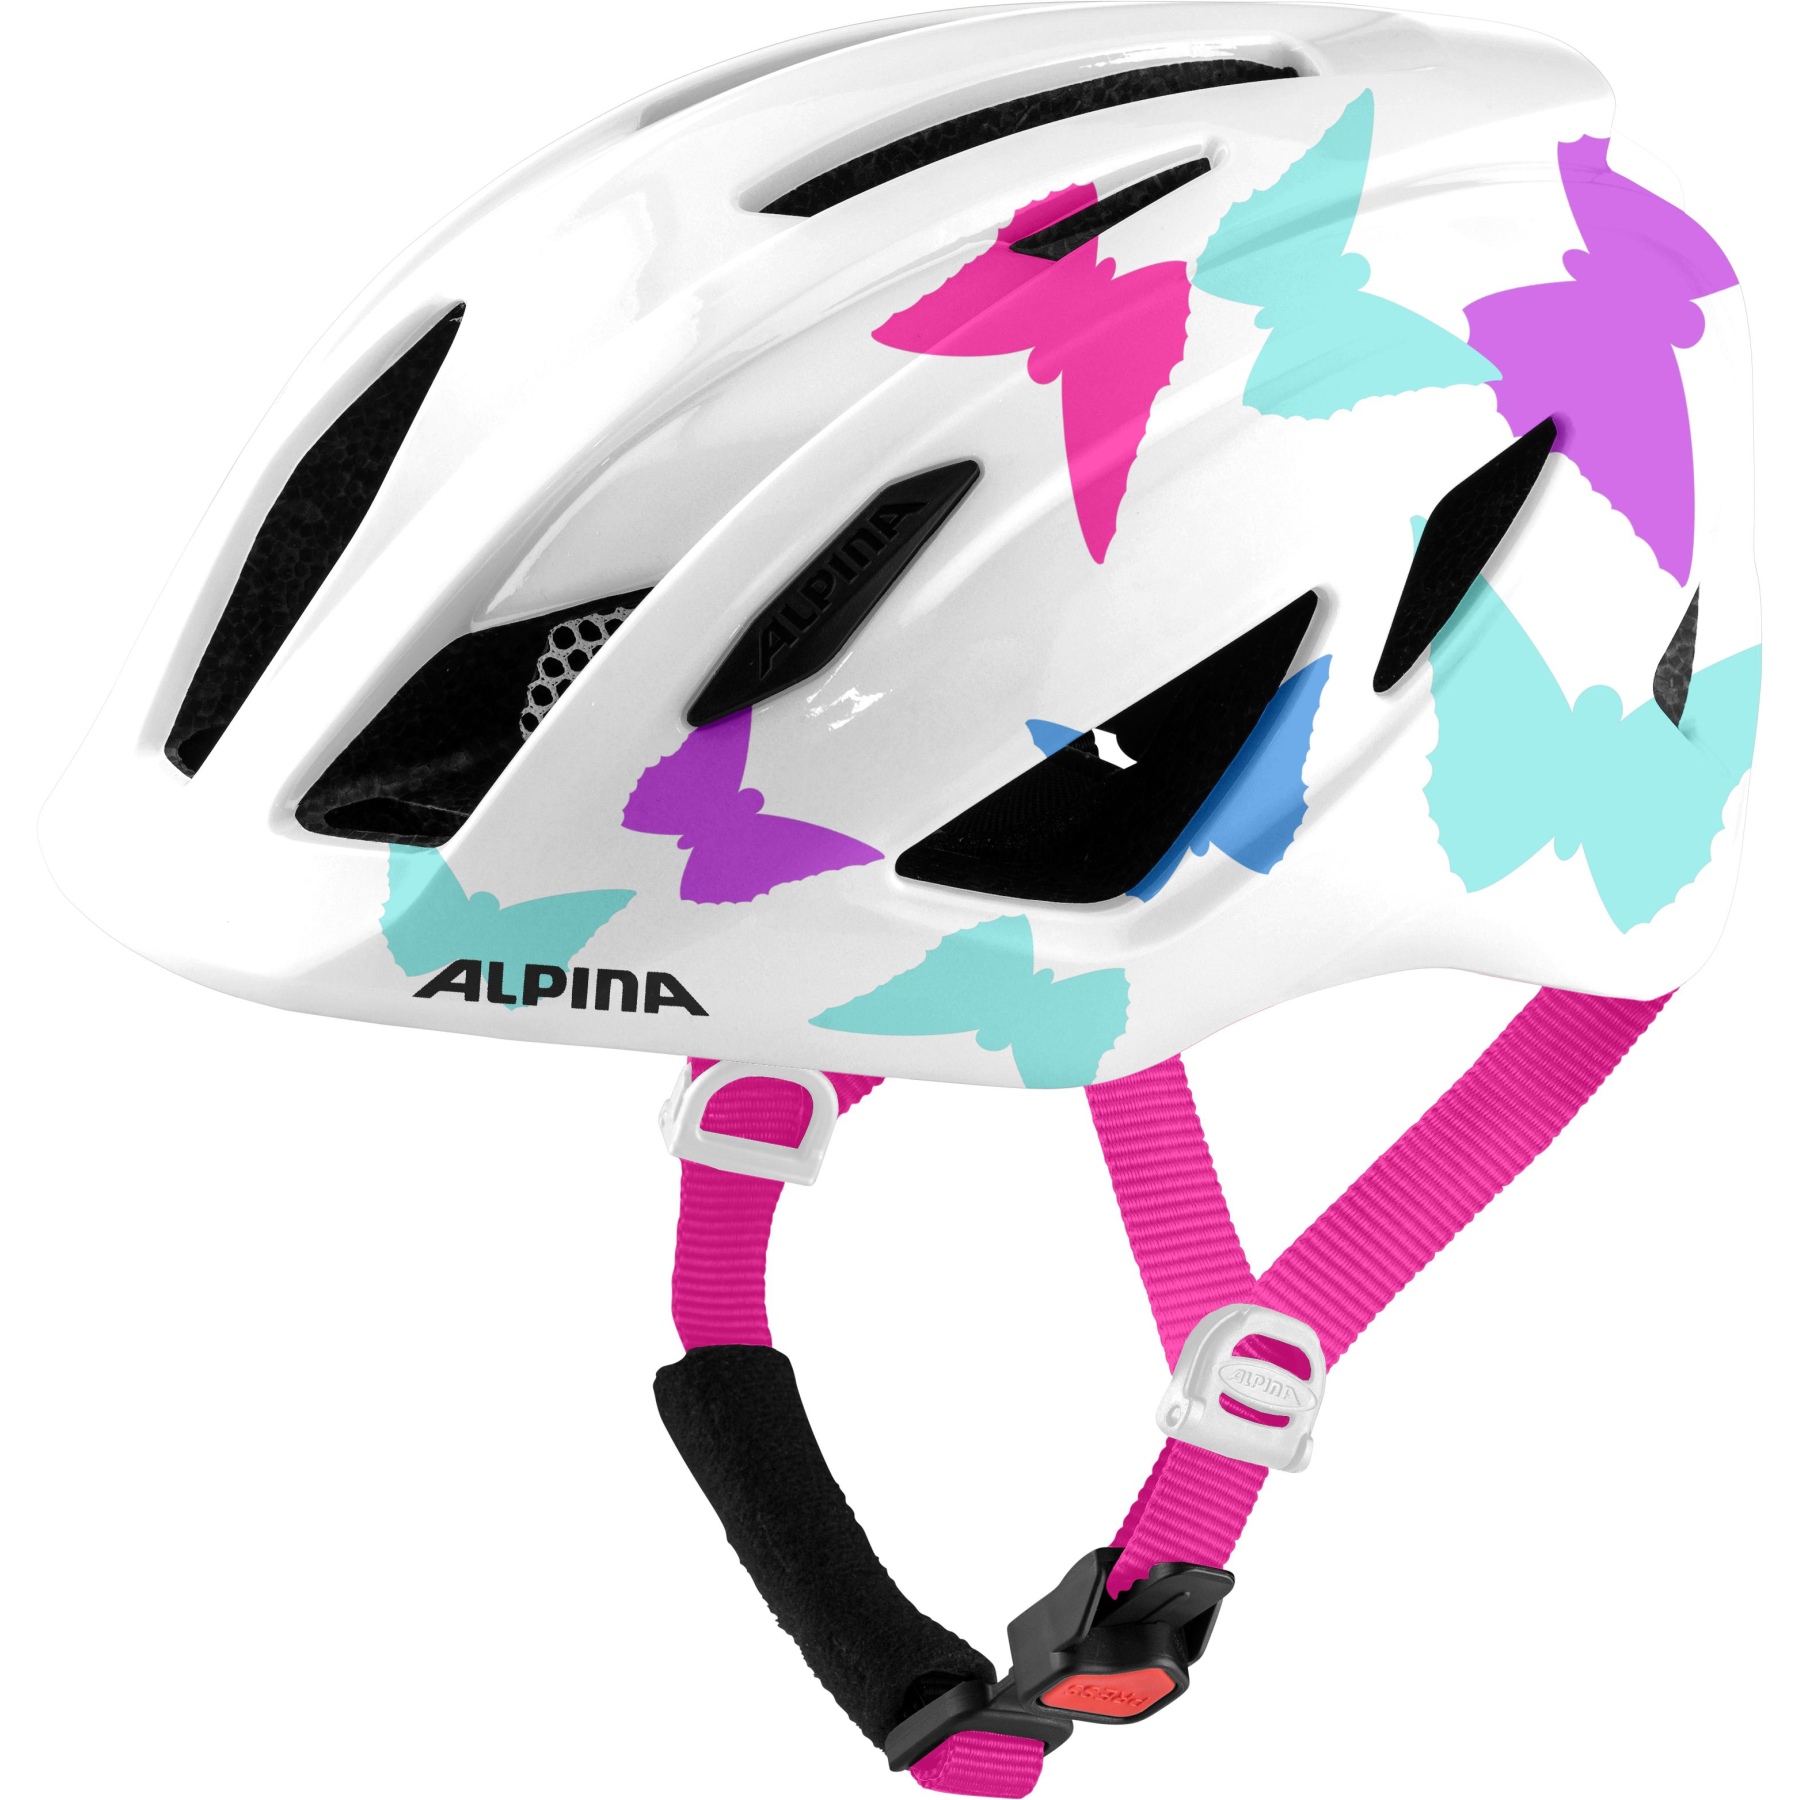 Productfoto van Alpina Pico Kids Bike Helmet - pearlwhite butterflies gloss